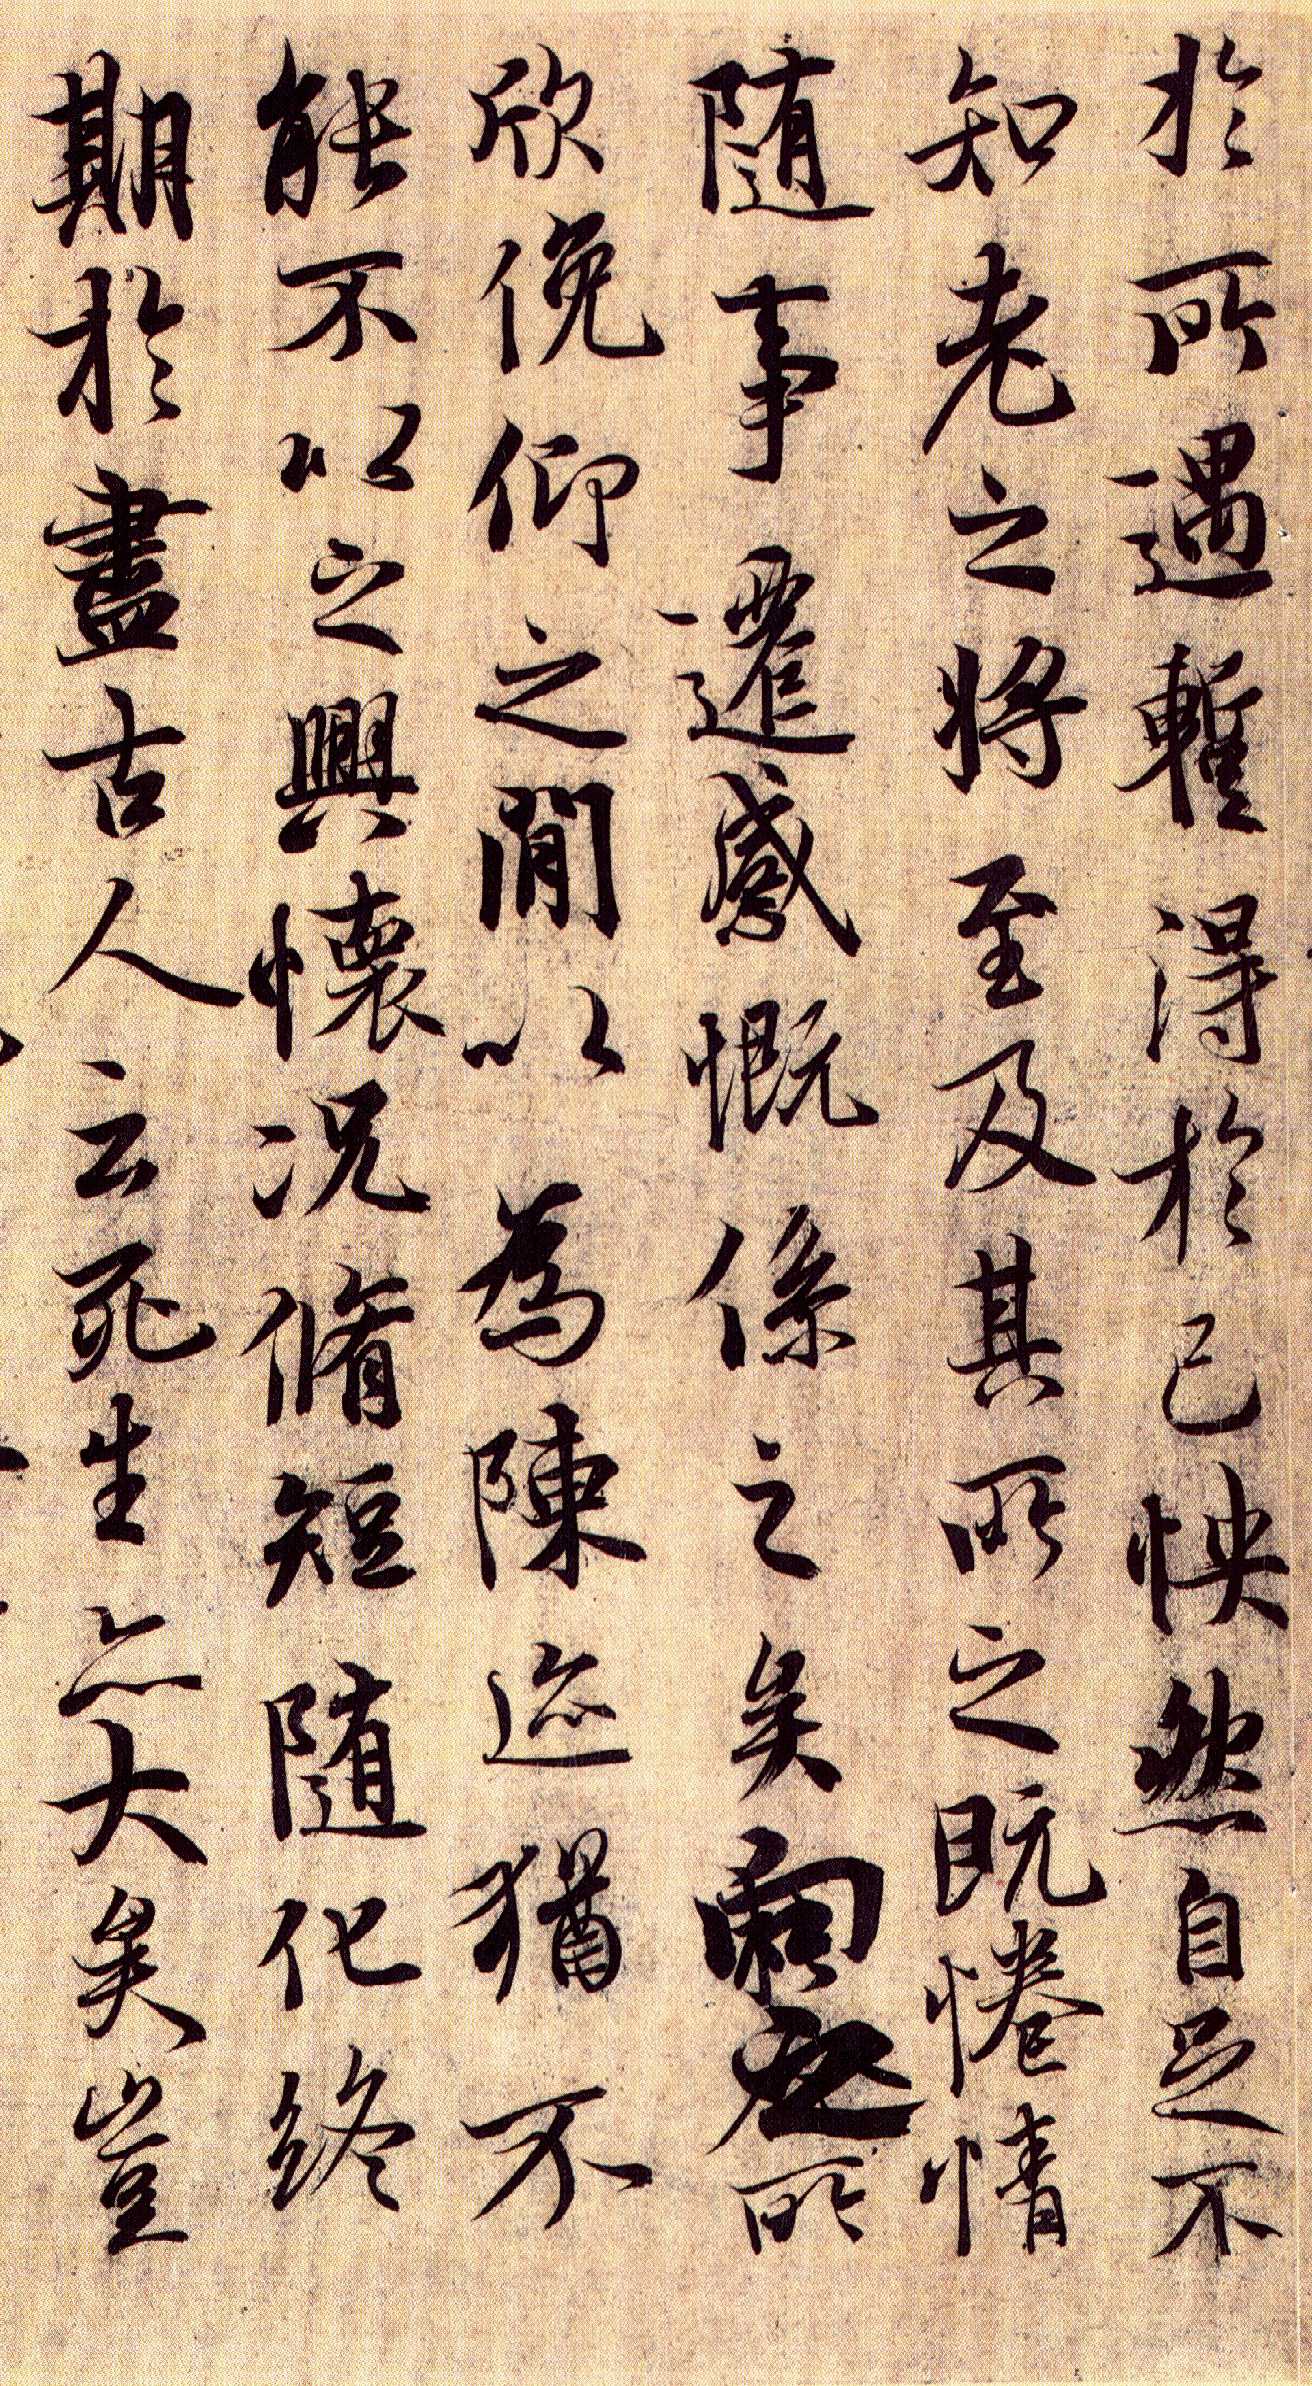 Chinese Calligraphy Chinese Calligraphy History China Travel Information Riset